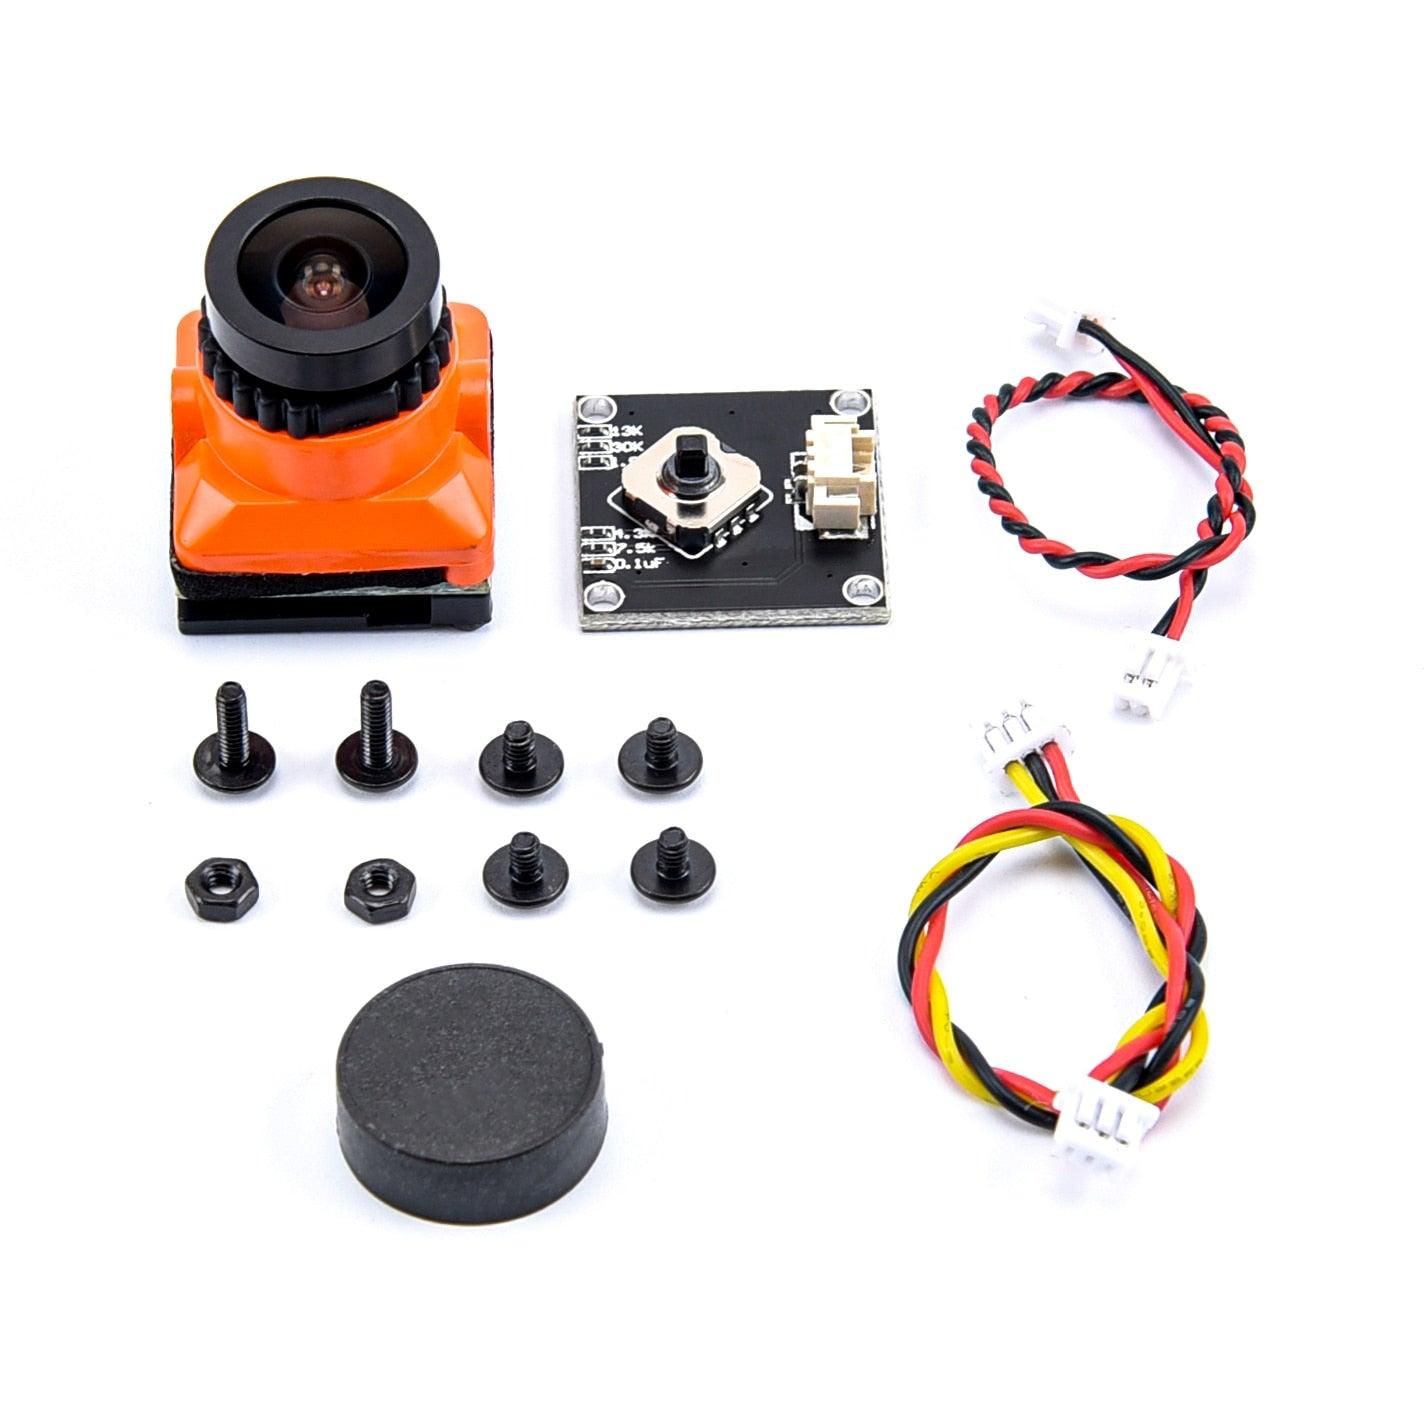 NEW 1/3 CMOS 1500TVL B19 Mini FPV Camera - 2.1mm Lens Power 5V-30V PAL / NTSC With OSD Internal Adjustable For RC FPV Racing Drone - RCDrone